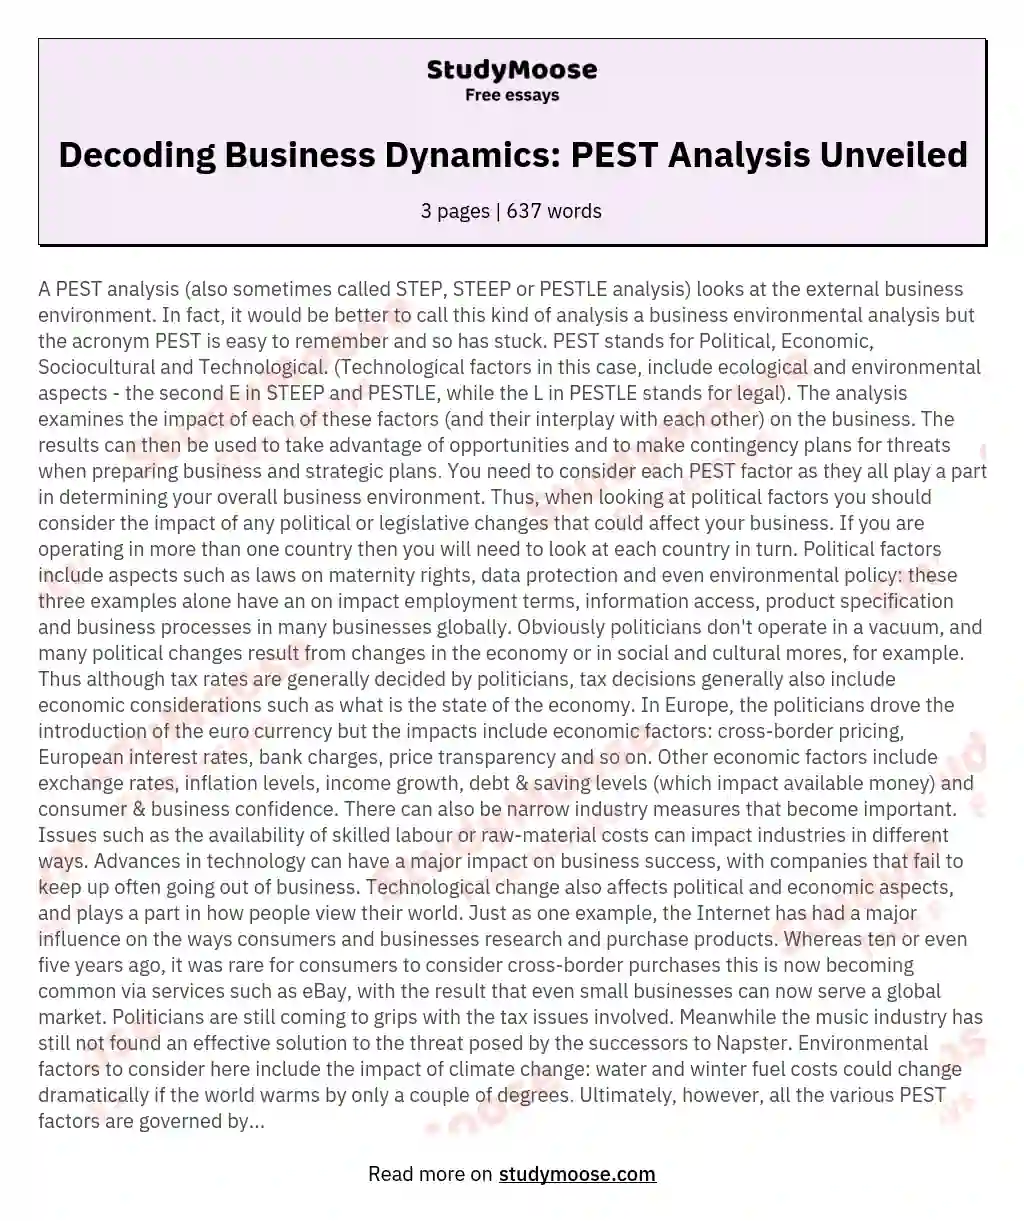 Decoding Business Dynamics: PEST Analysis Unveiled essay